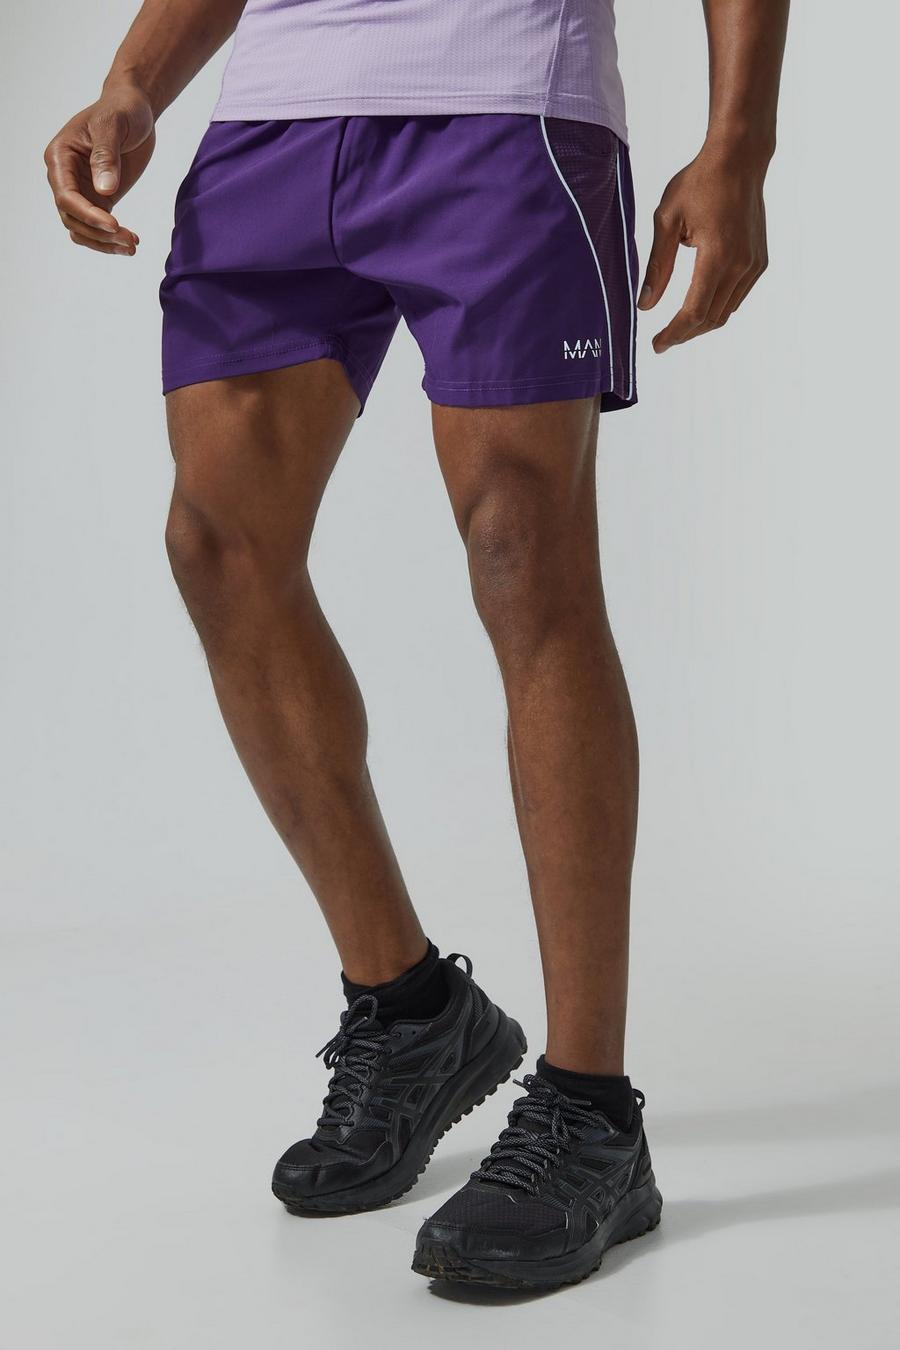 Man Active strukturierte Colorblock Mesh-Shorts, Purple image number 1